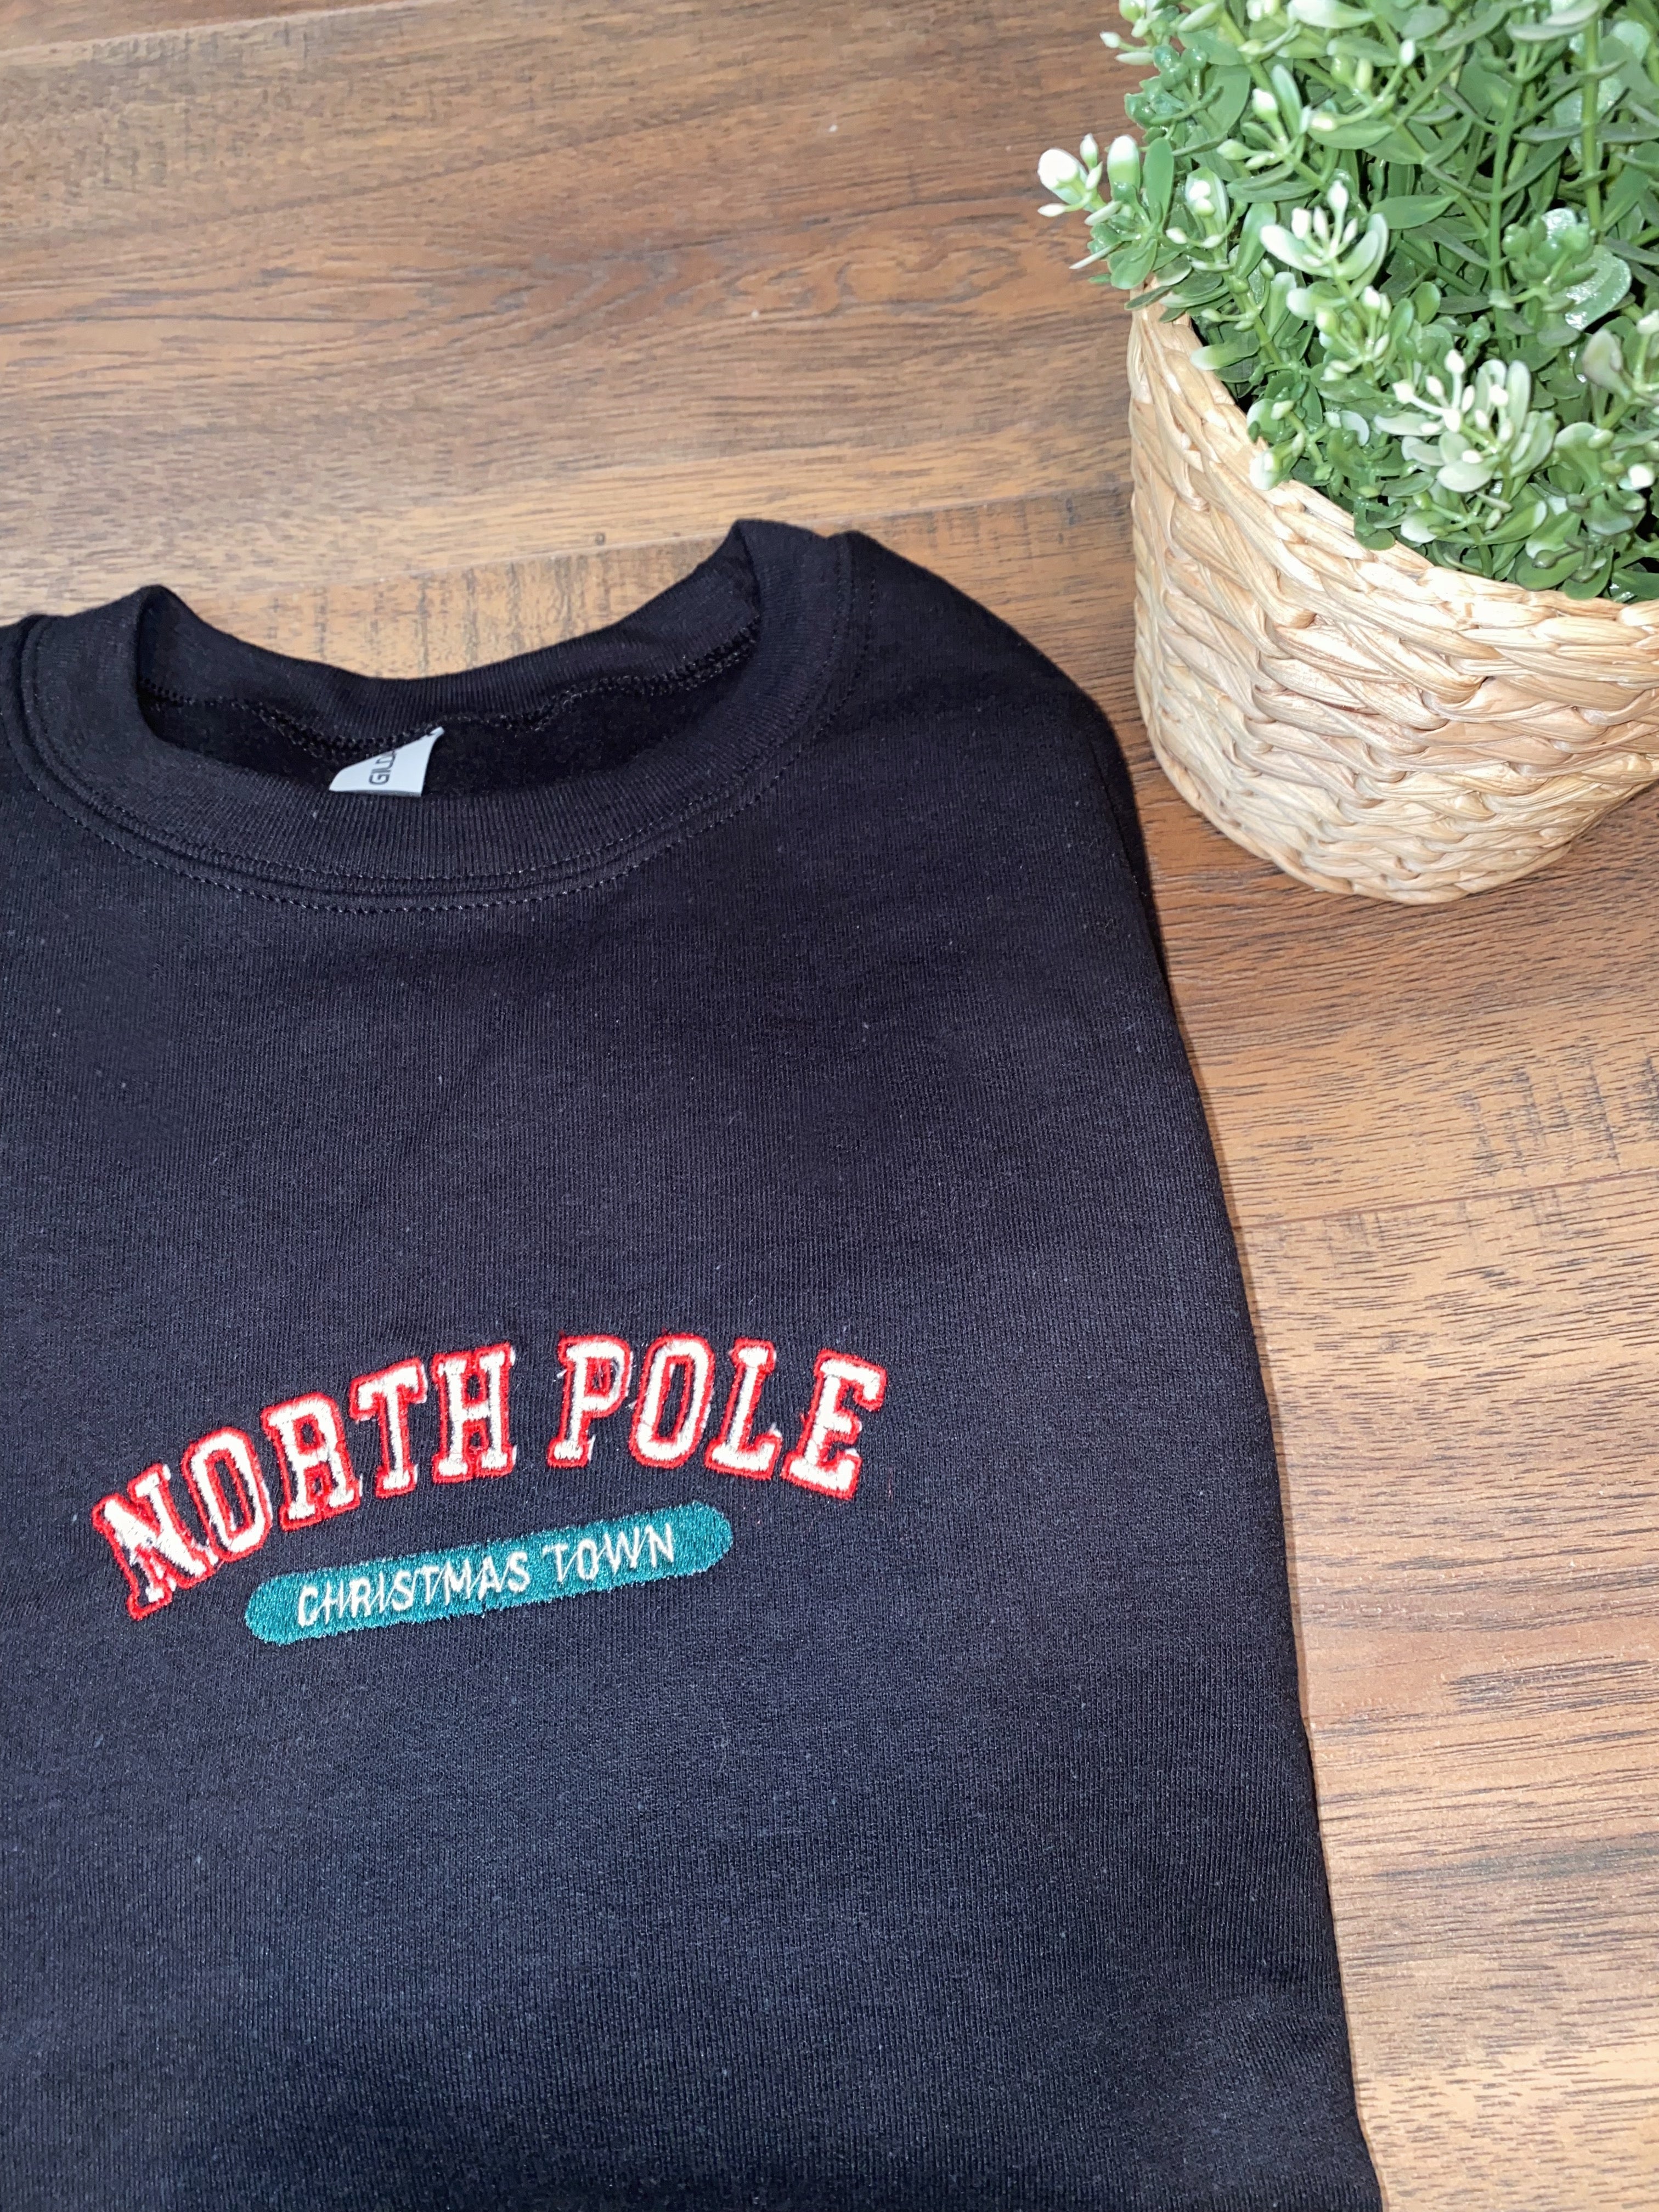 North Pole Sweatshirt